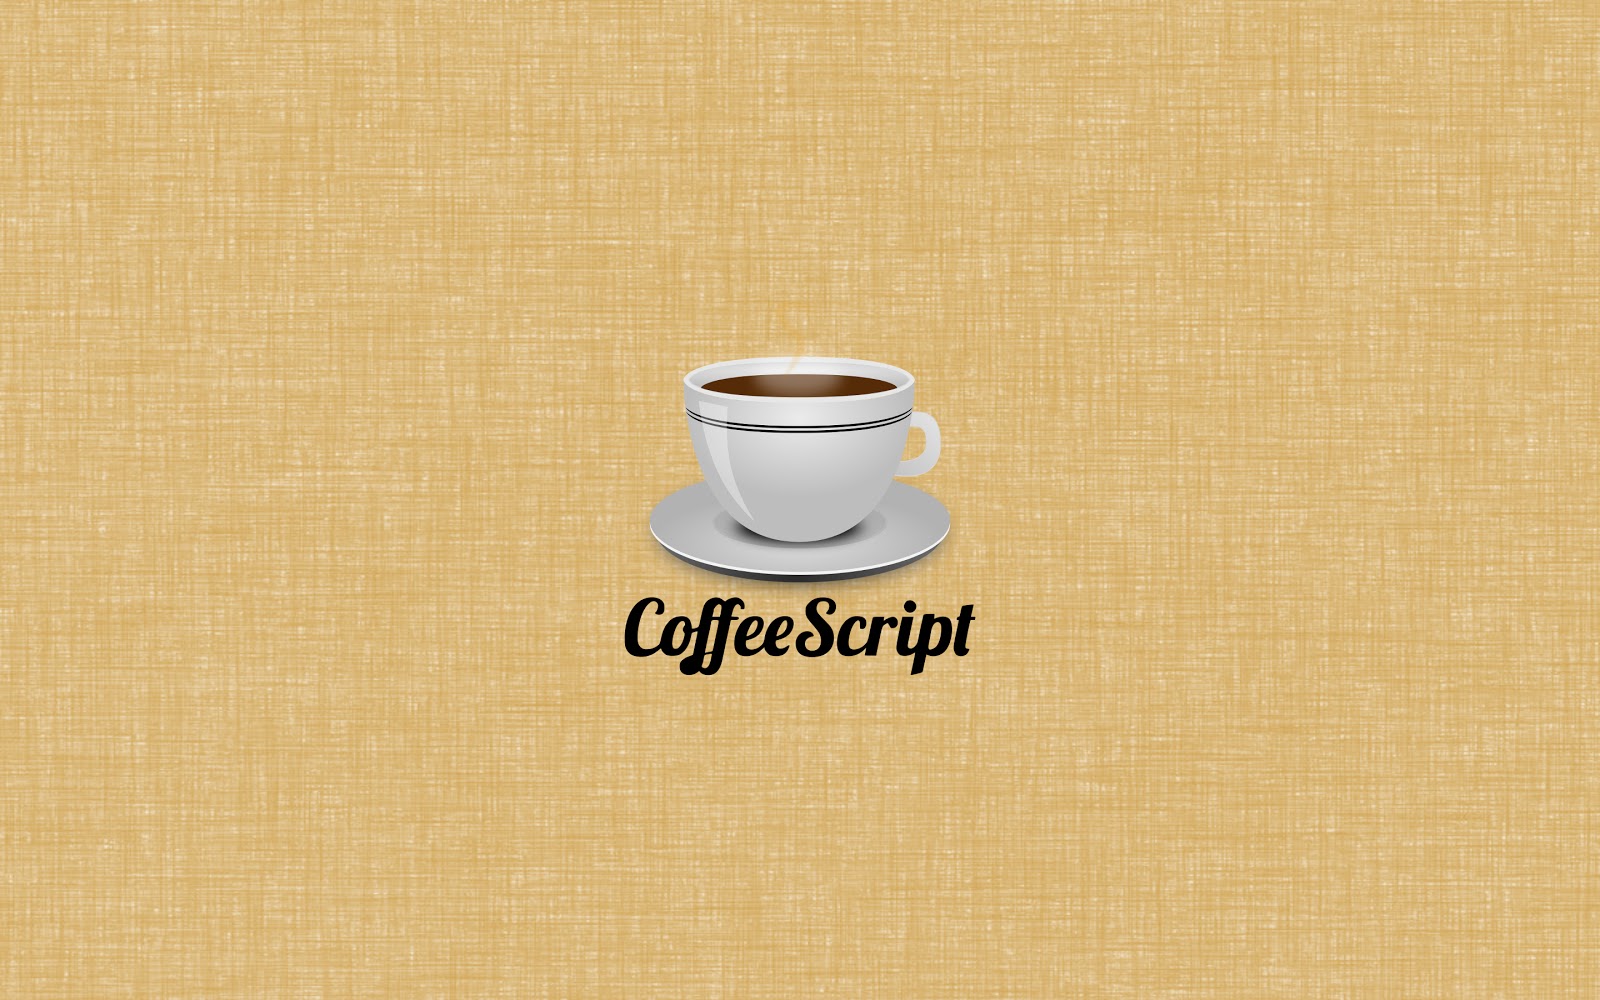 3 Free Programming Books to Learn CoffeeScript